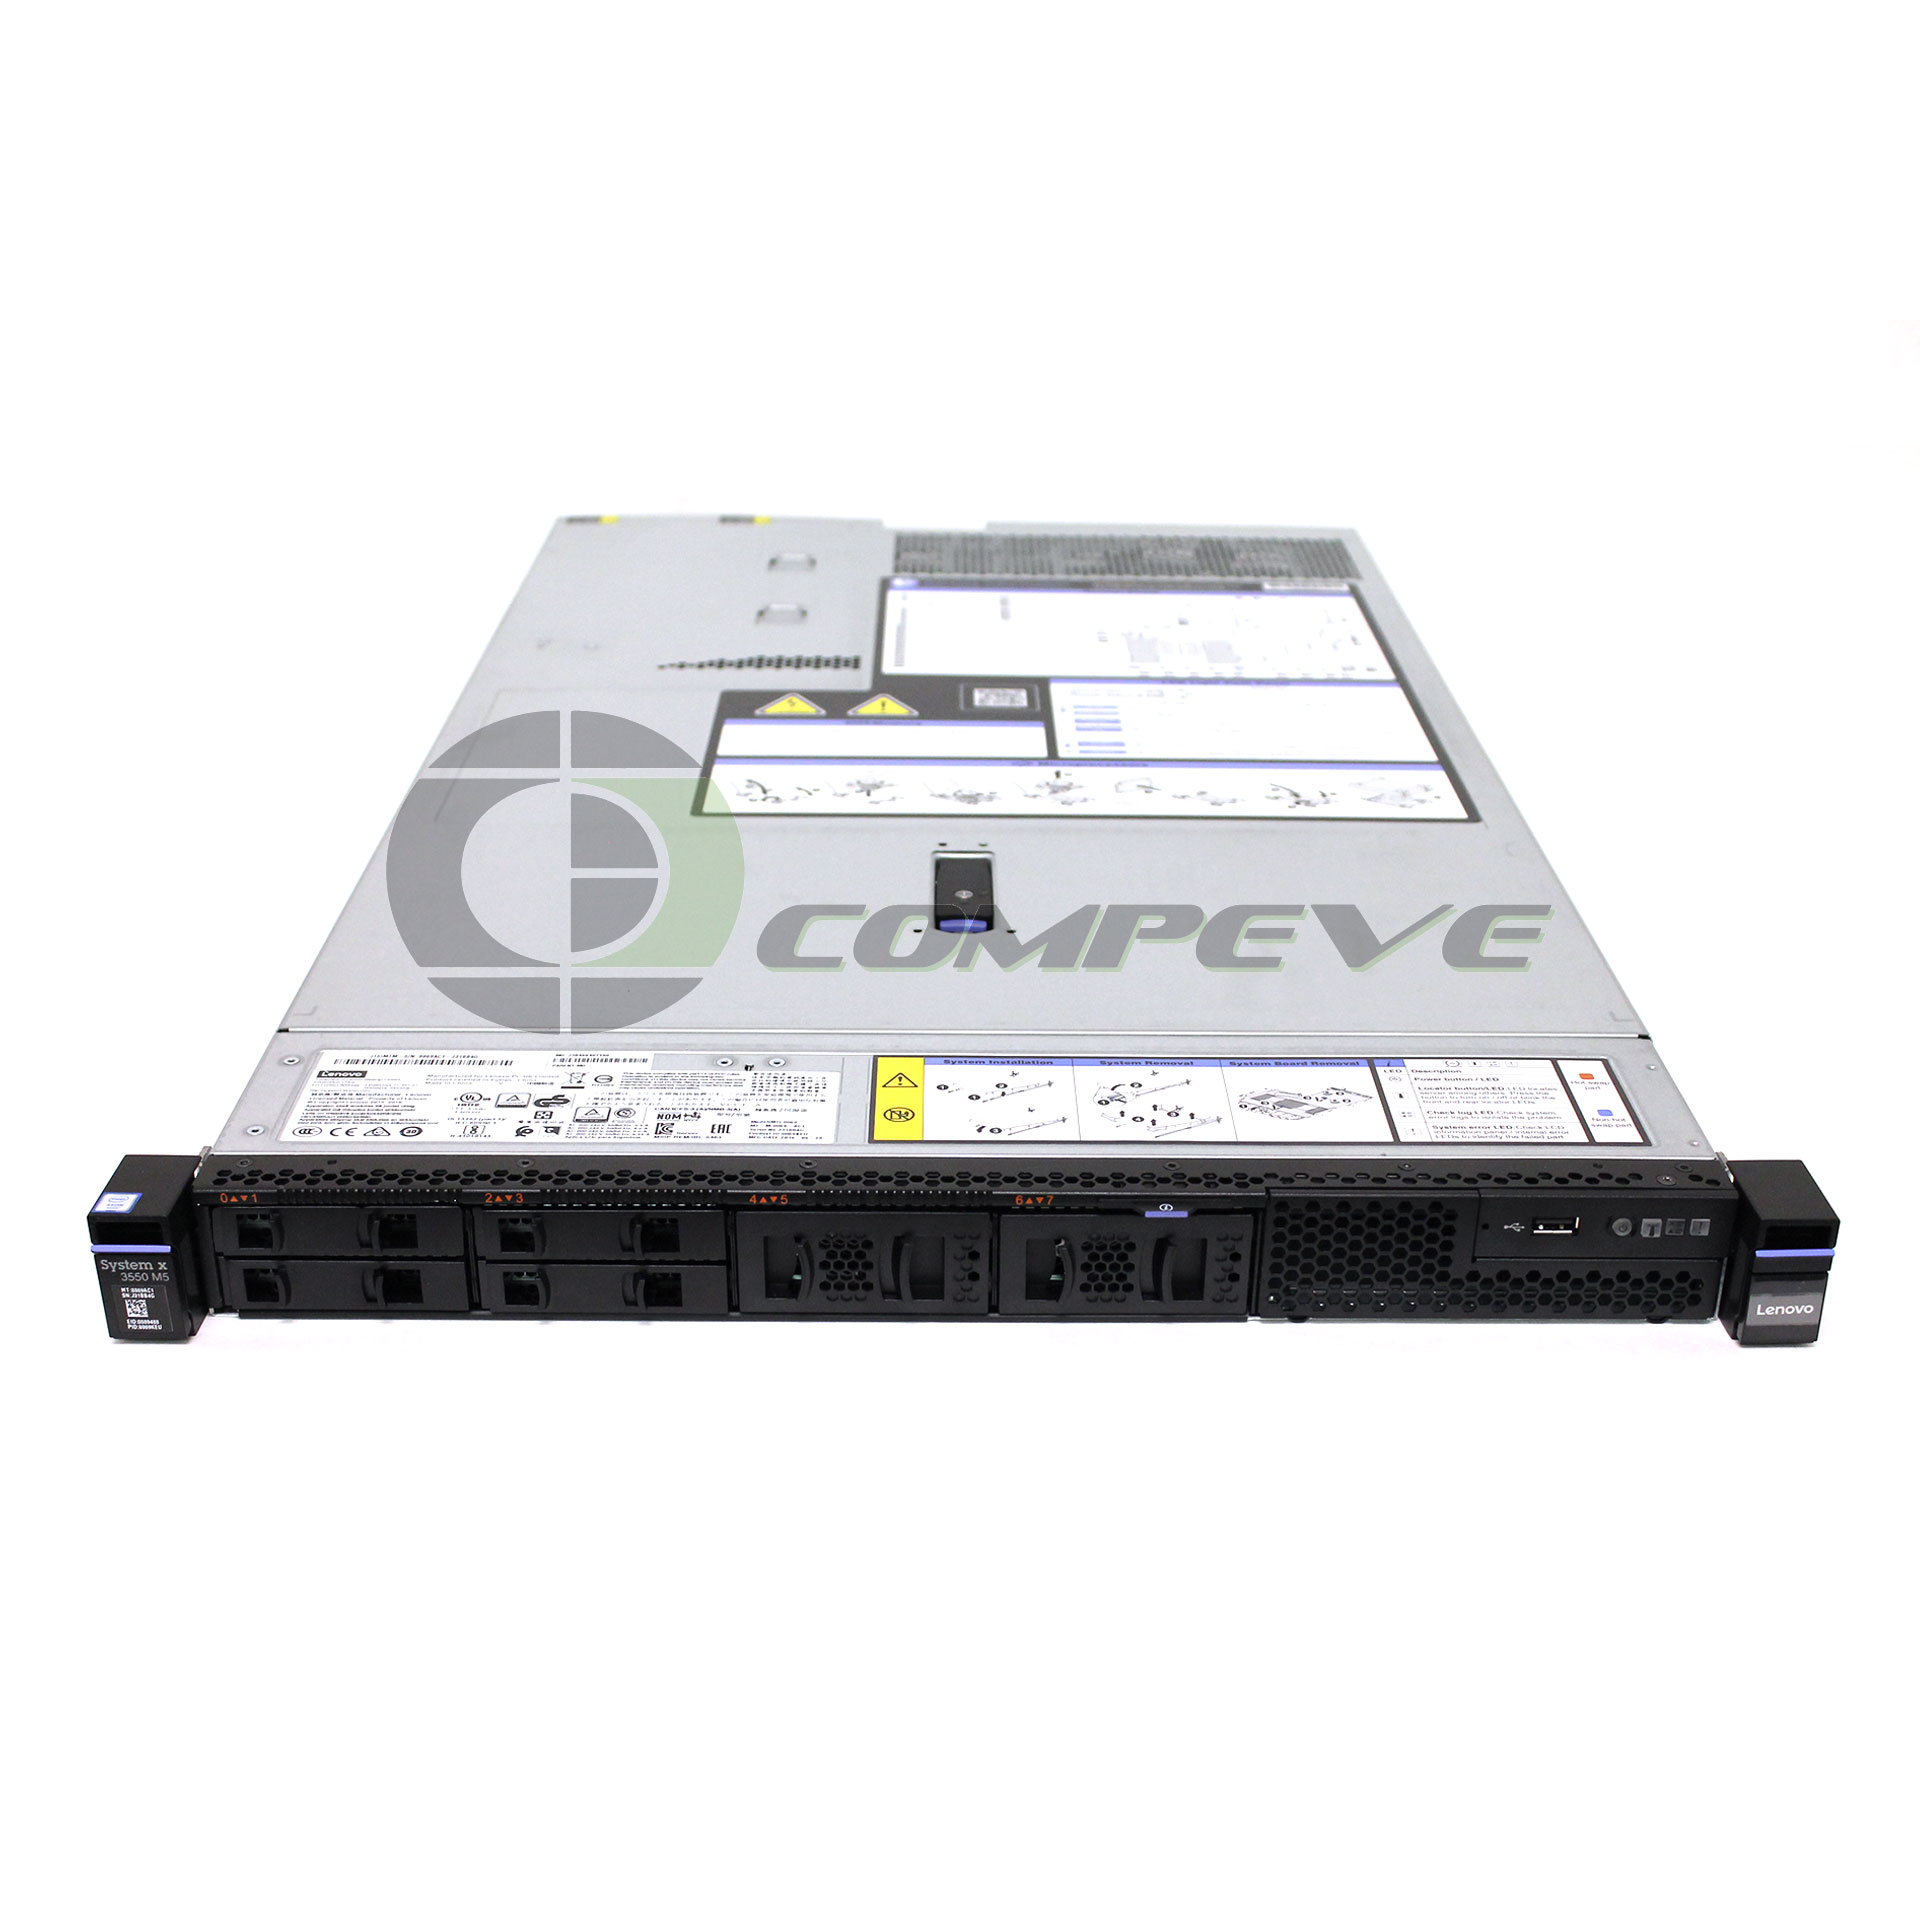 Lenove System x x3550 M5 8869AC1 Server Xeon E5-2620v4 16GB RAM 